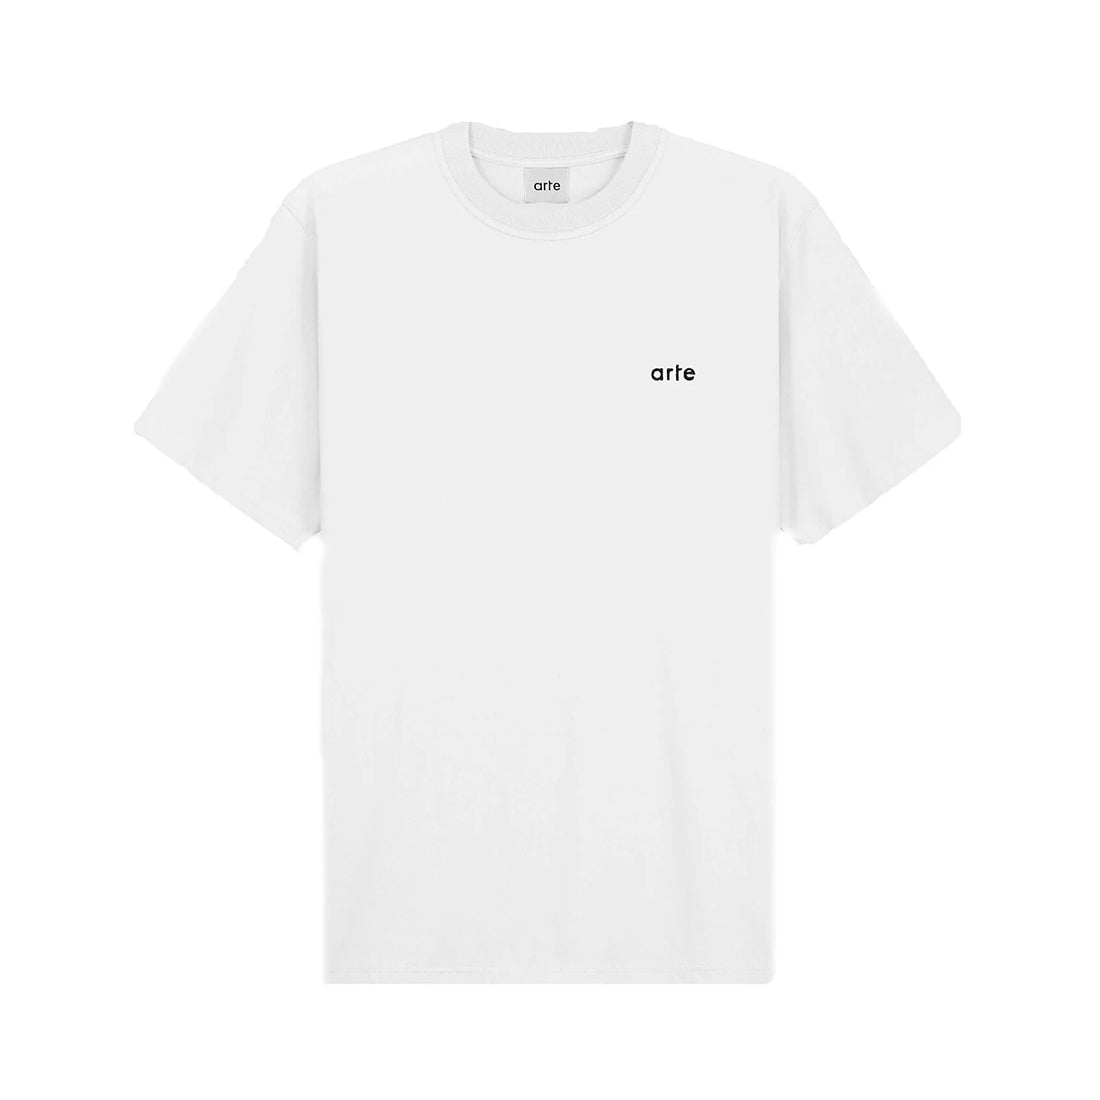 Teo Back Rings T-Shirt - White